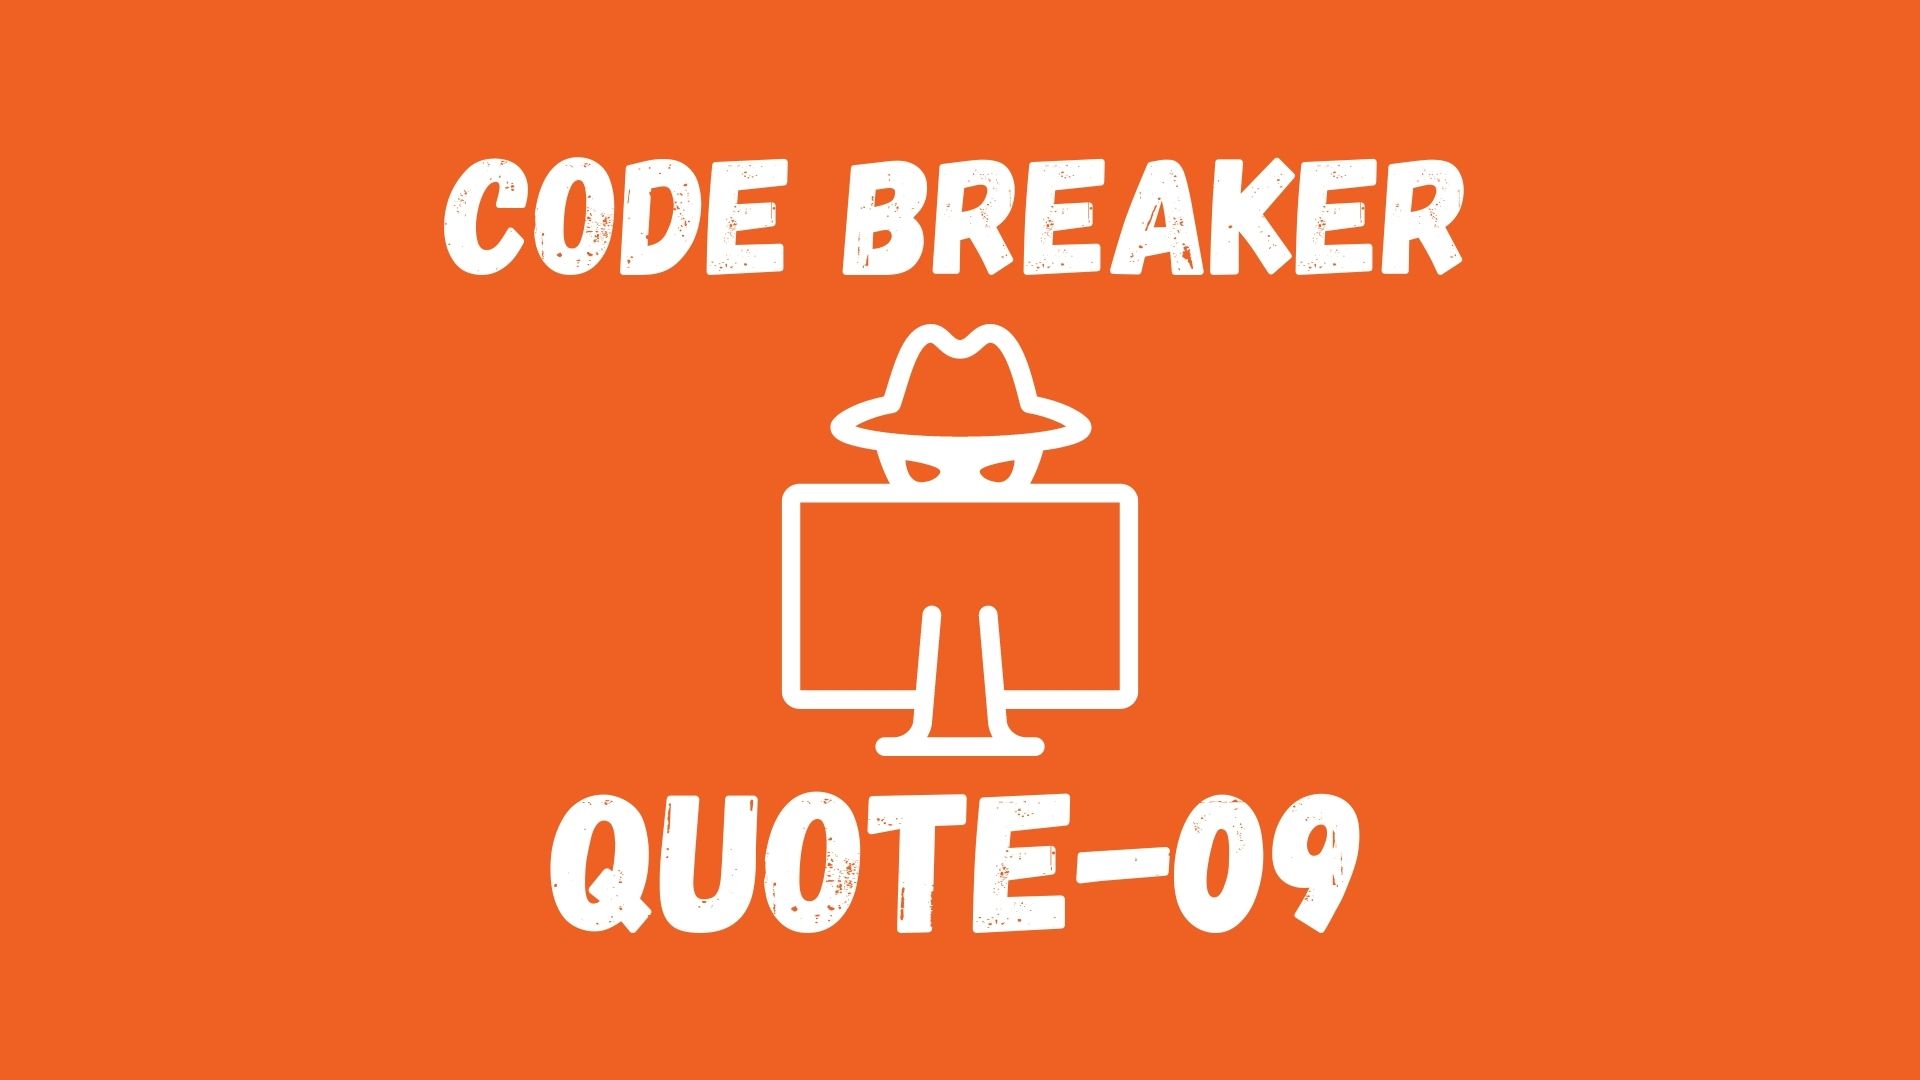 Code Breaker Decipher the Quote 09